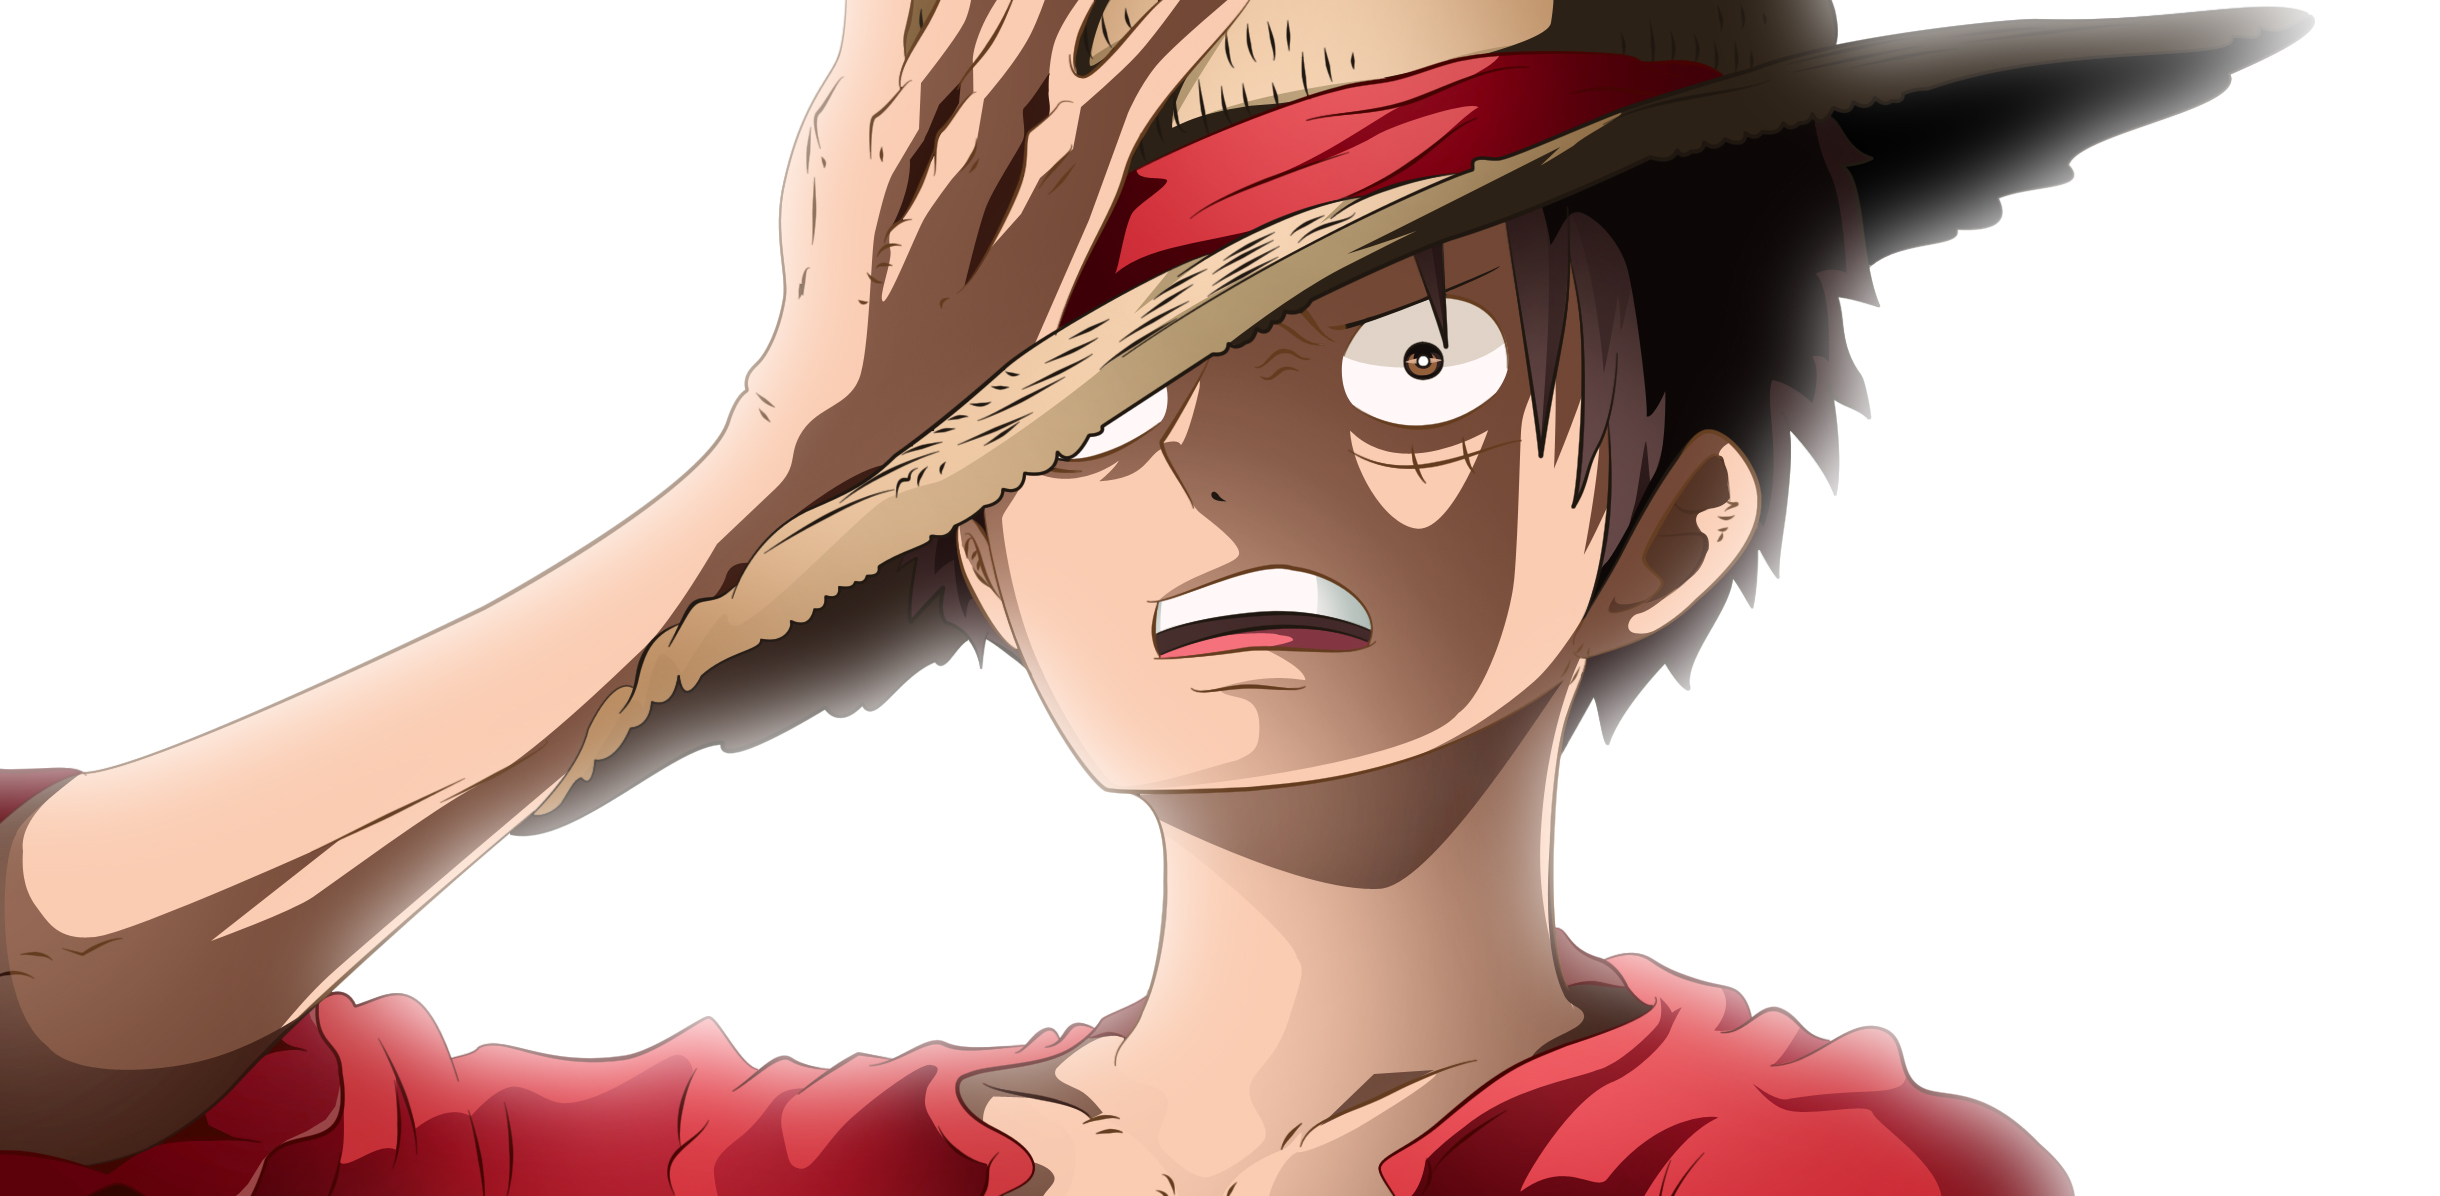 Anime One Piece HD Wallpaper by Choparini